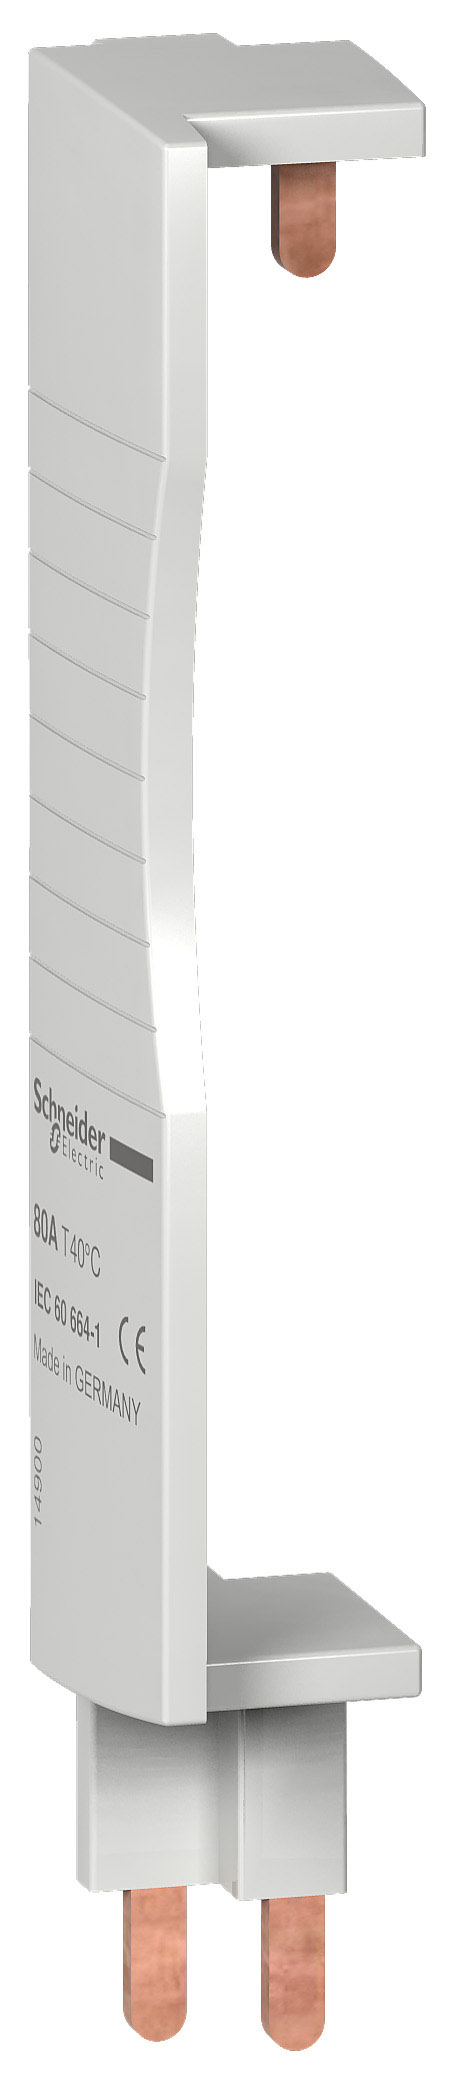 Peigne vertical 25-40a / entraxe 125mm - SCHNEIDER ELECTRIC